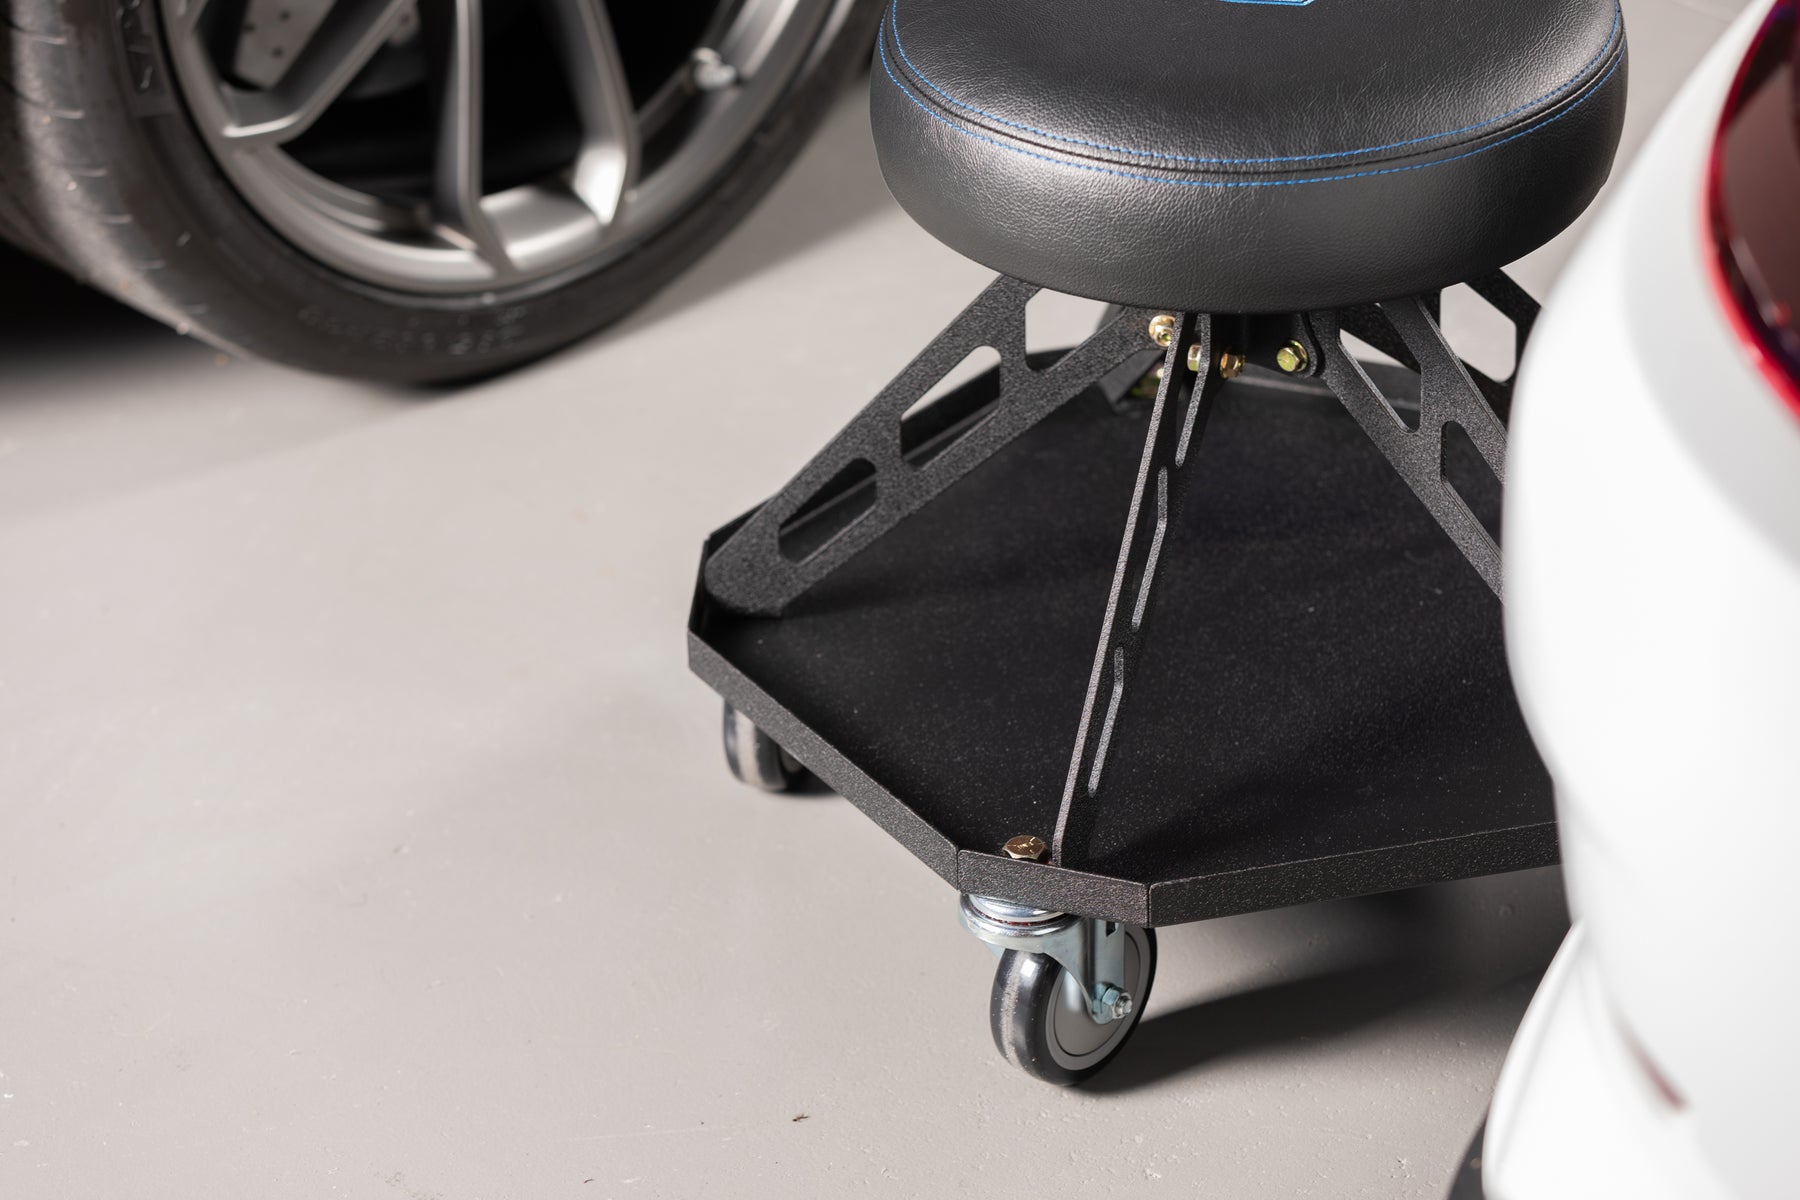 Best Garage Stool With Wheels  Robust Steel Pro – Vyper Industrial